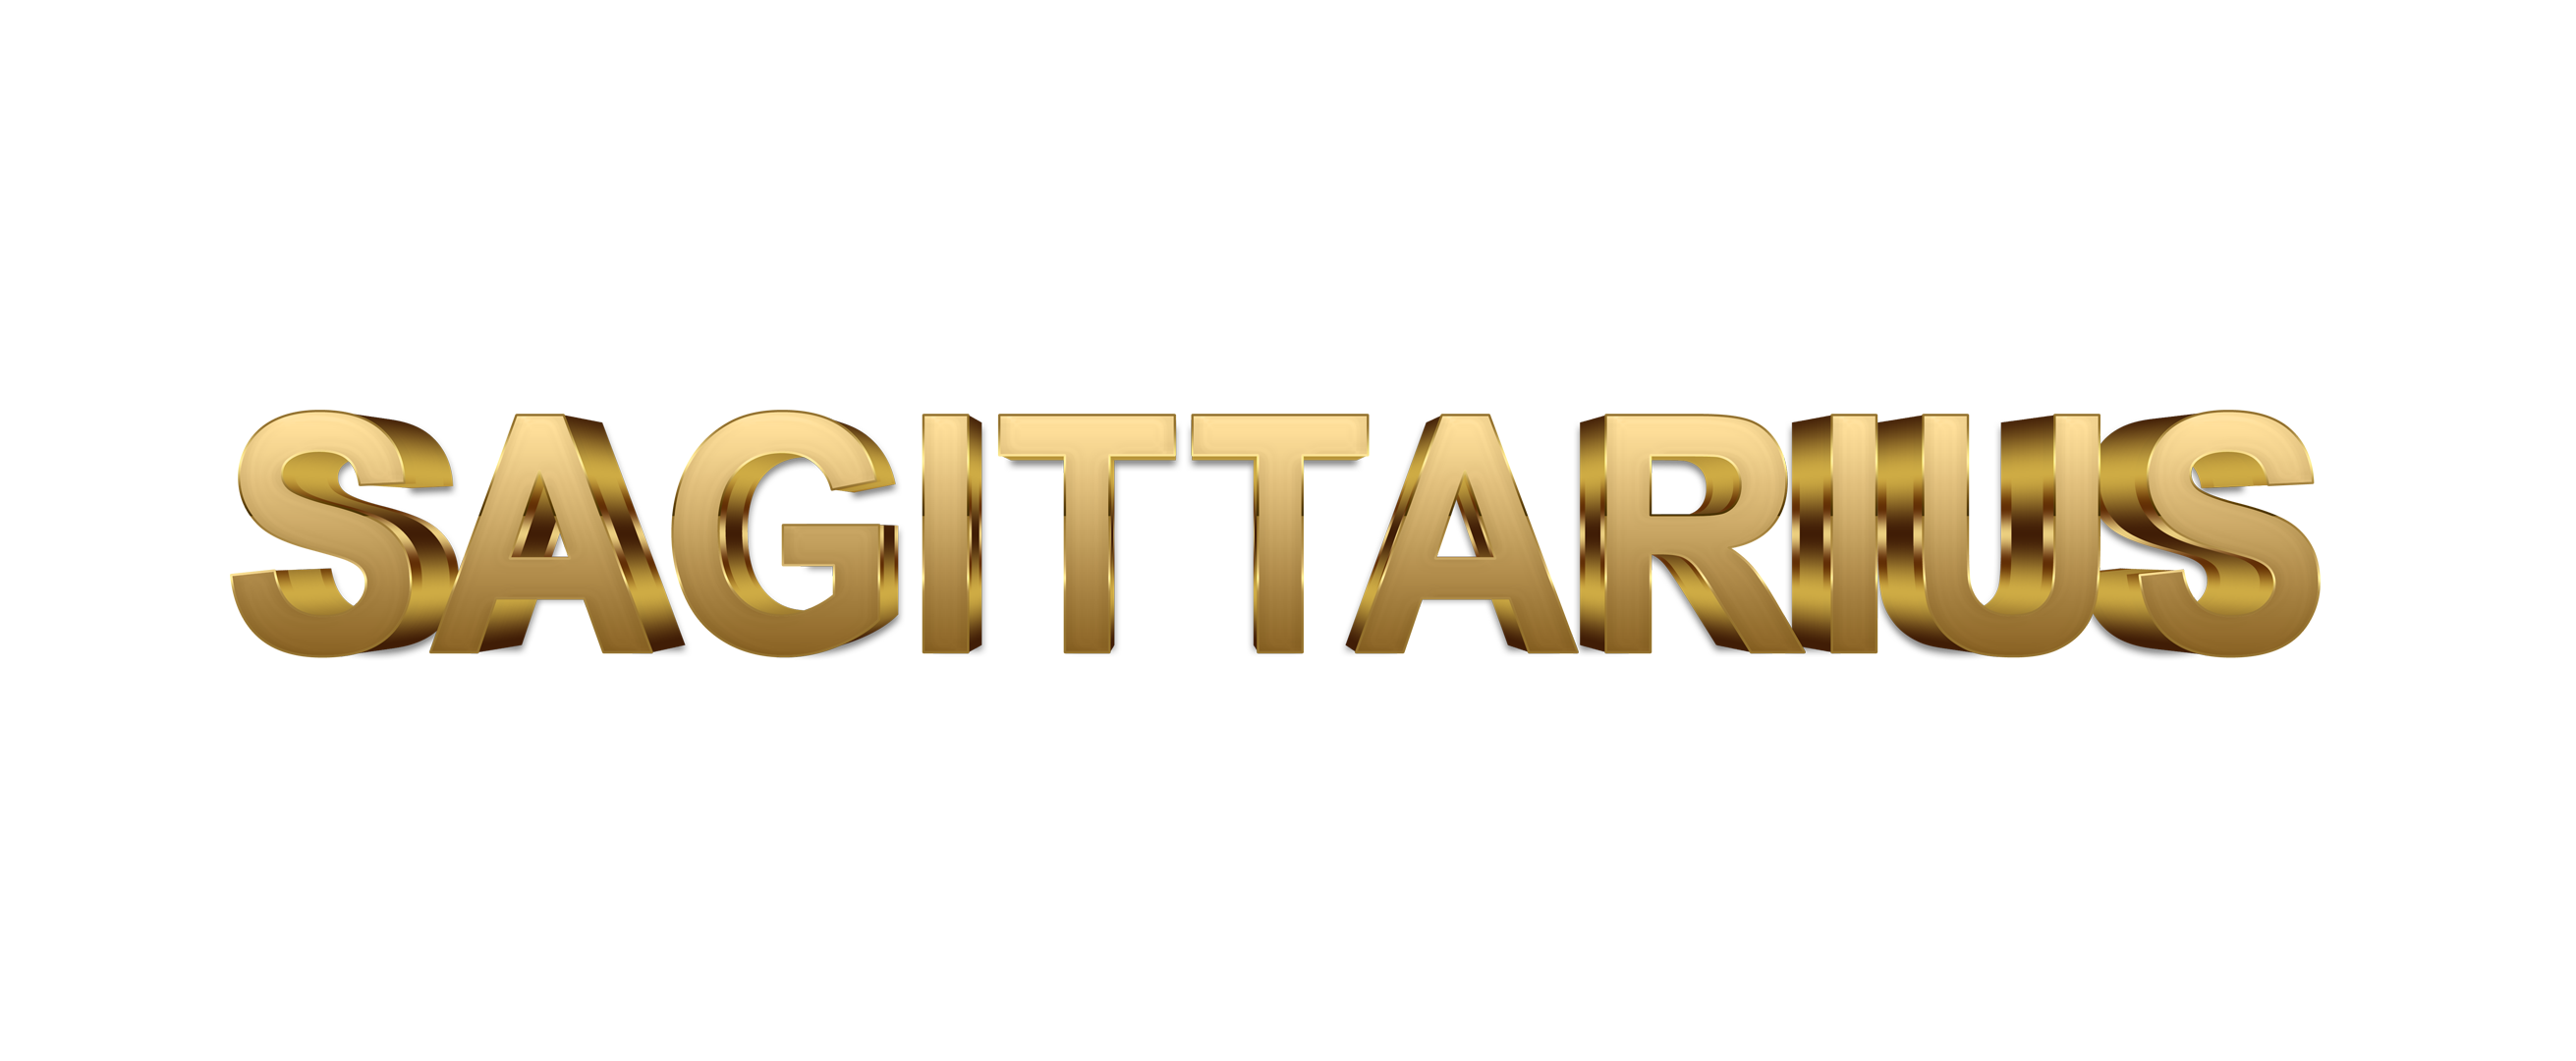 Sagittarius word png, Sagittarius png, word Sagittarius gold text typography PNG images free